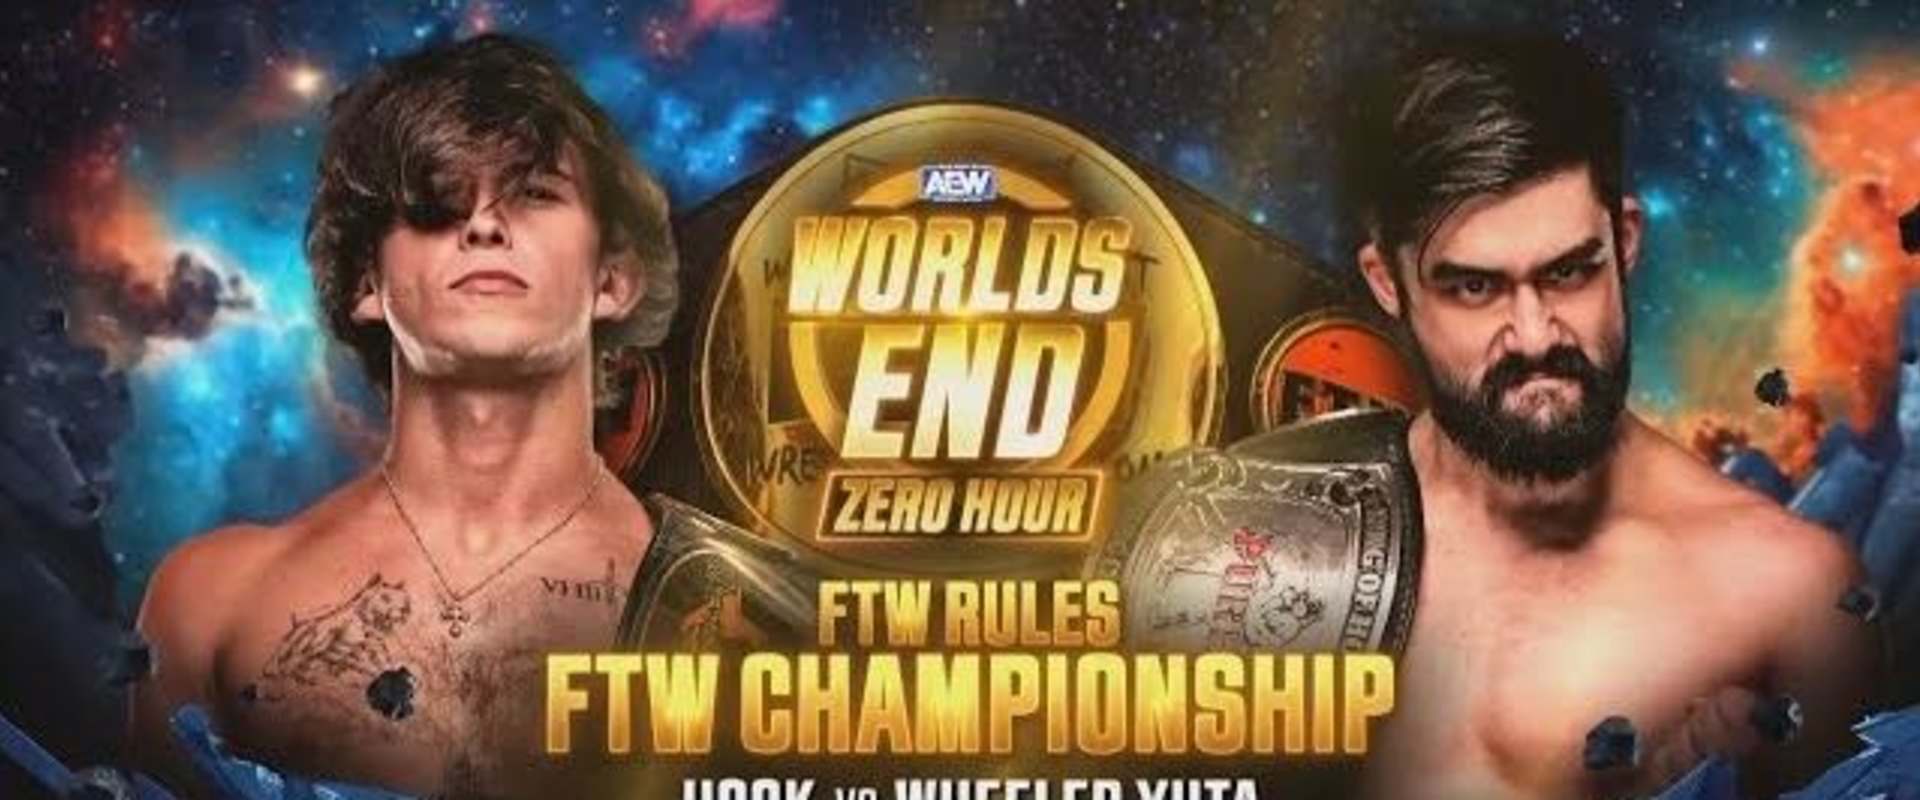 AEW Worlds End background 2